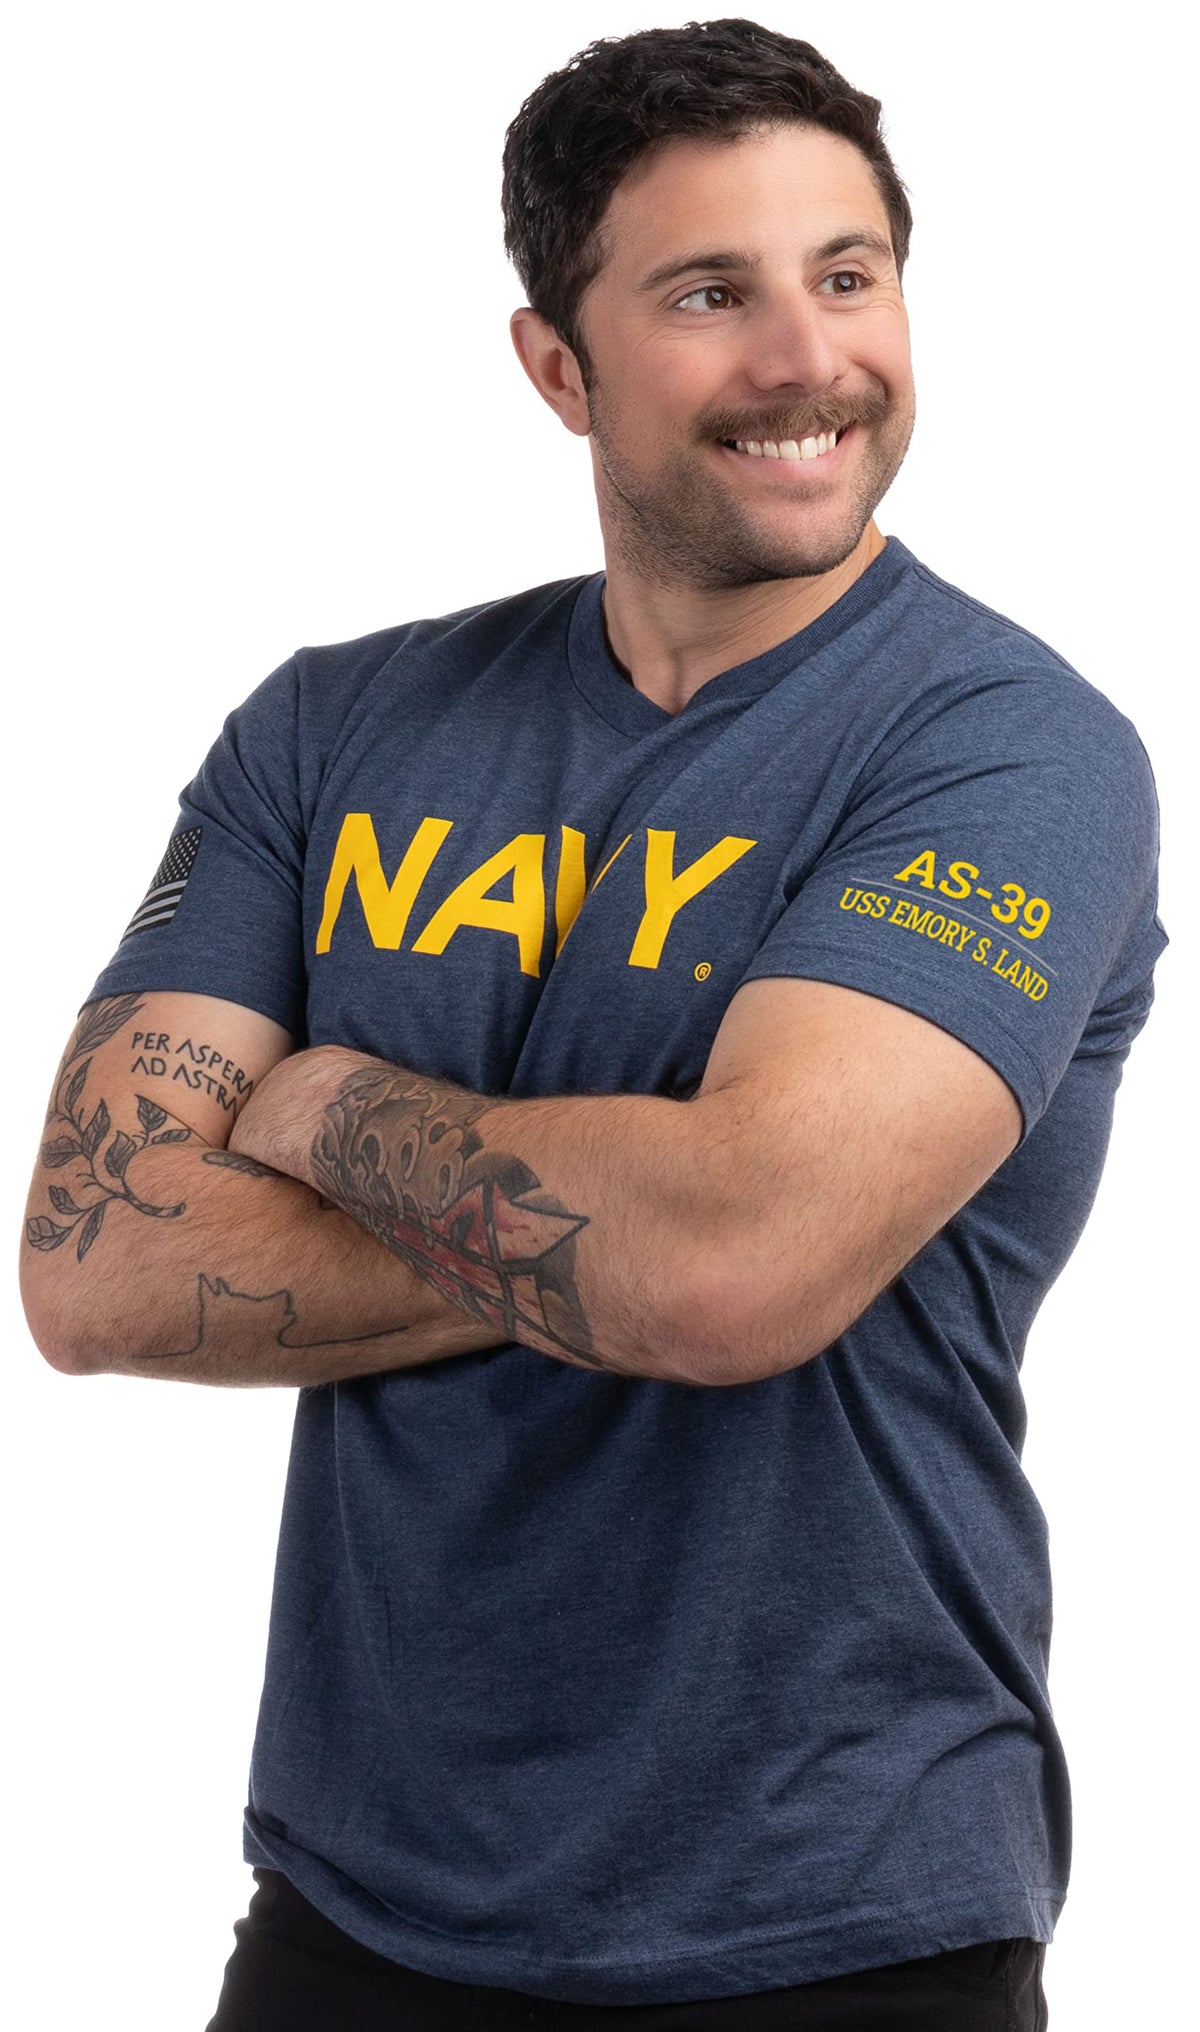 USS Emory S. Land, AS-39 | U.S. Navy Sailor Veteran USN United States Naval T-shirt for Men Women